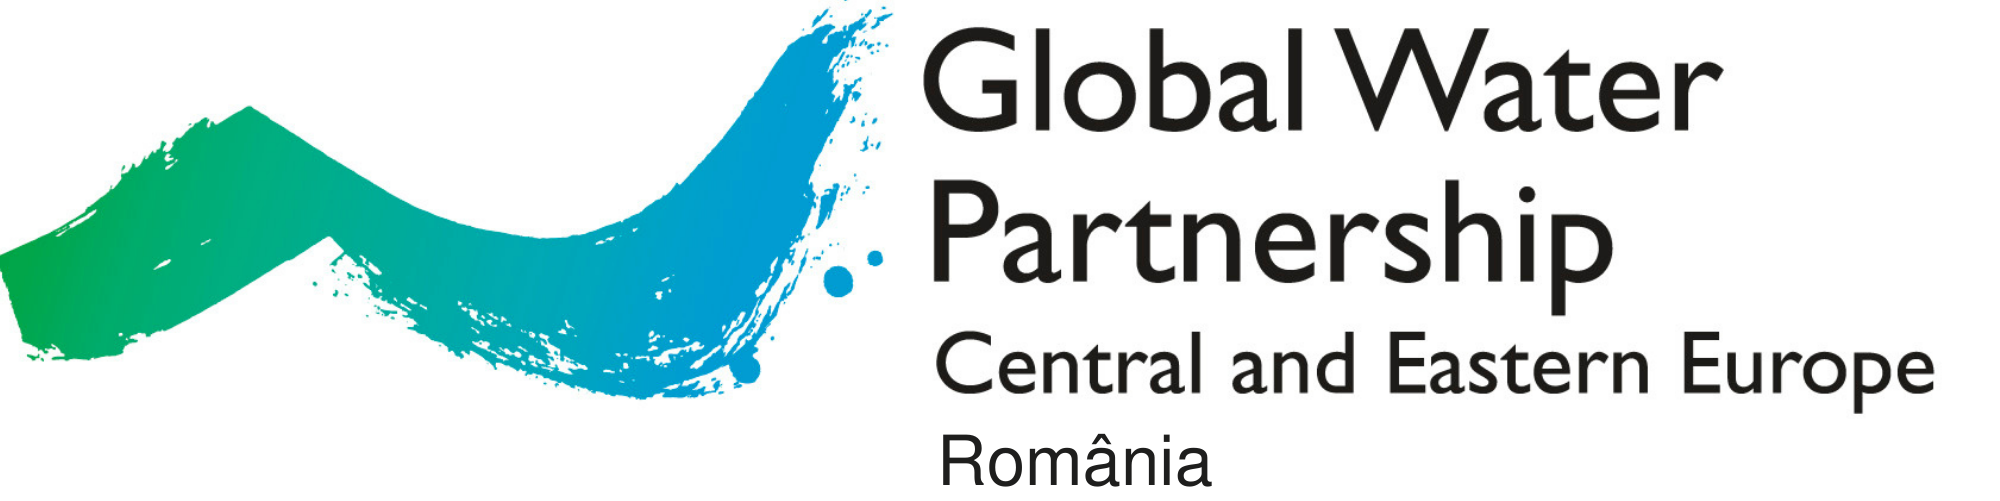 Global Water Partnership   ROMANIA